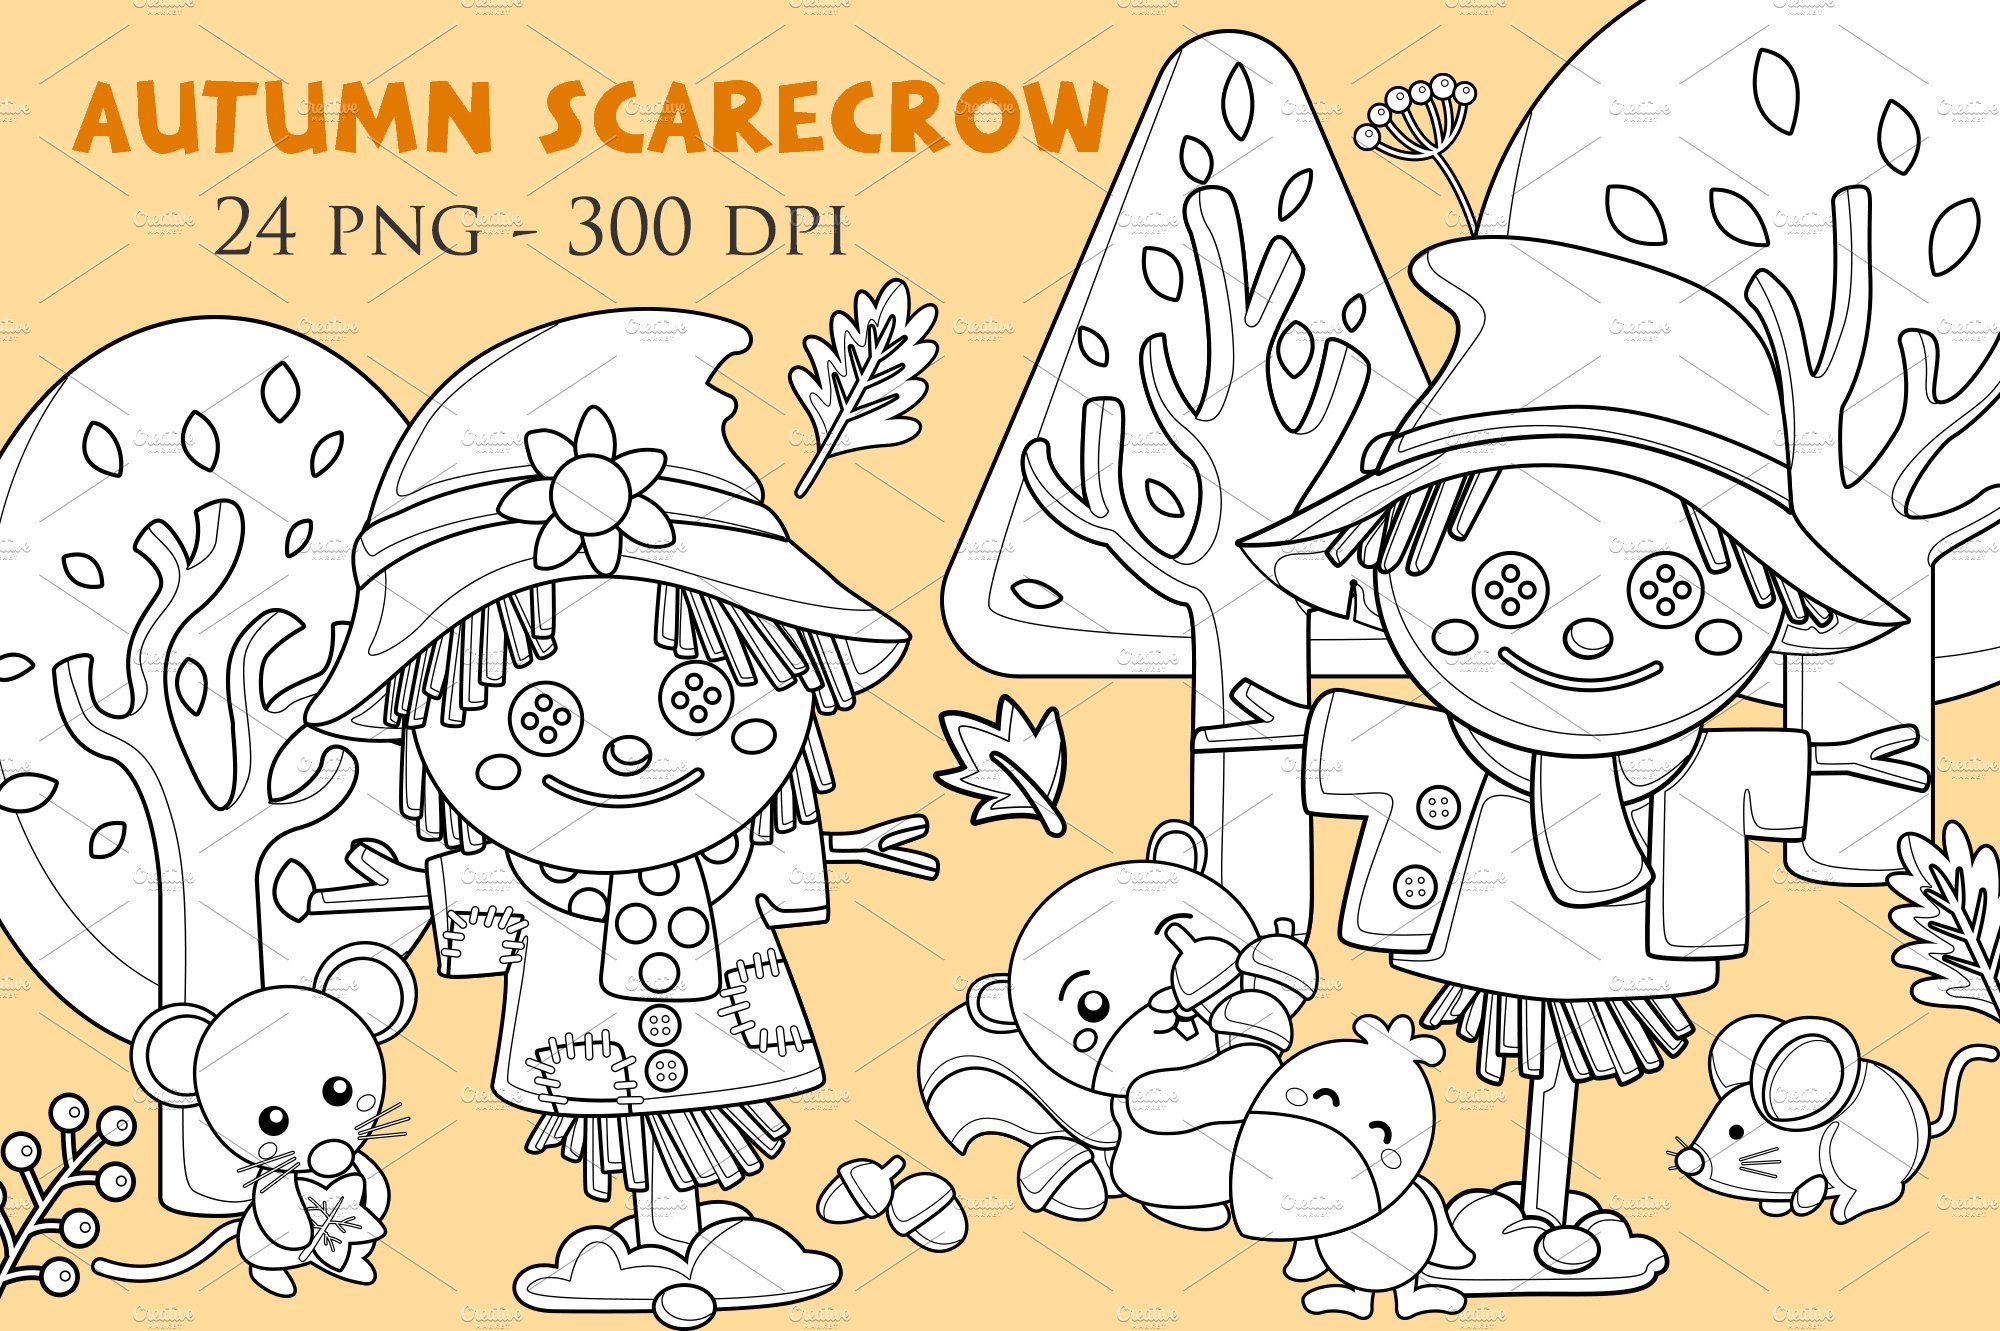 Cute Autumn Scarecrow Digital Stamp cover image.